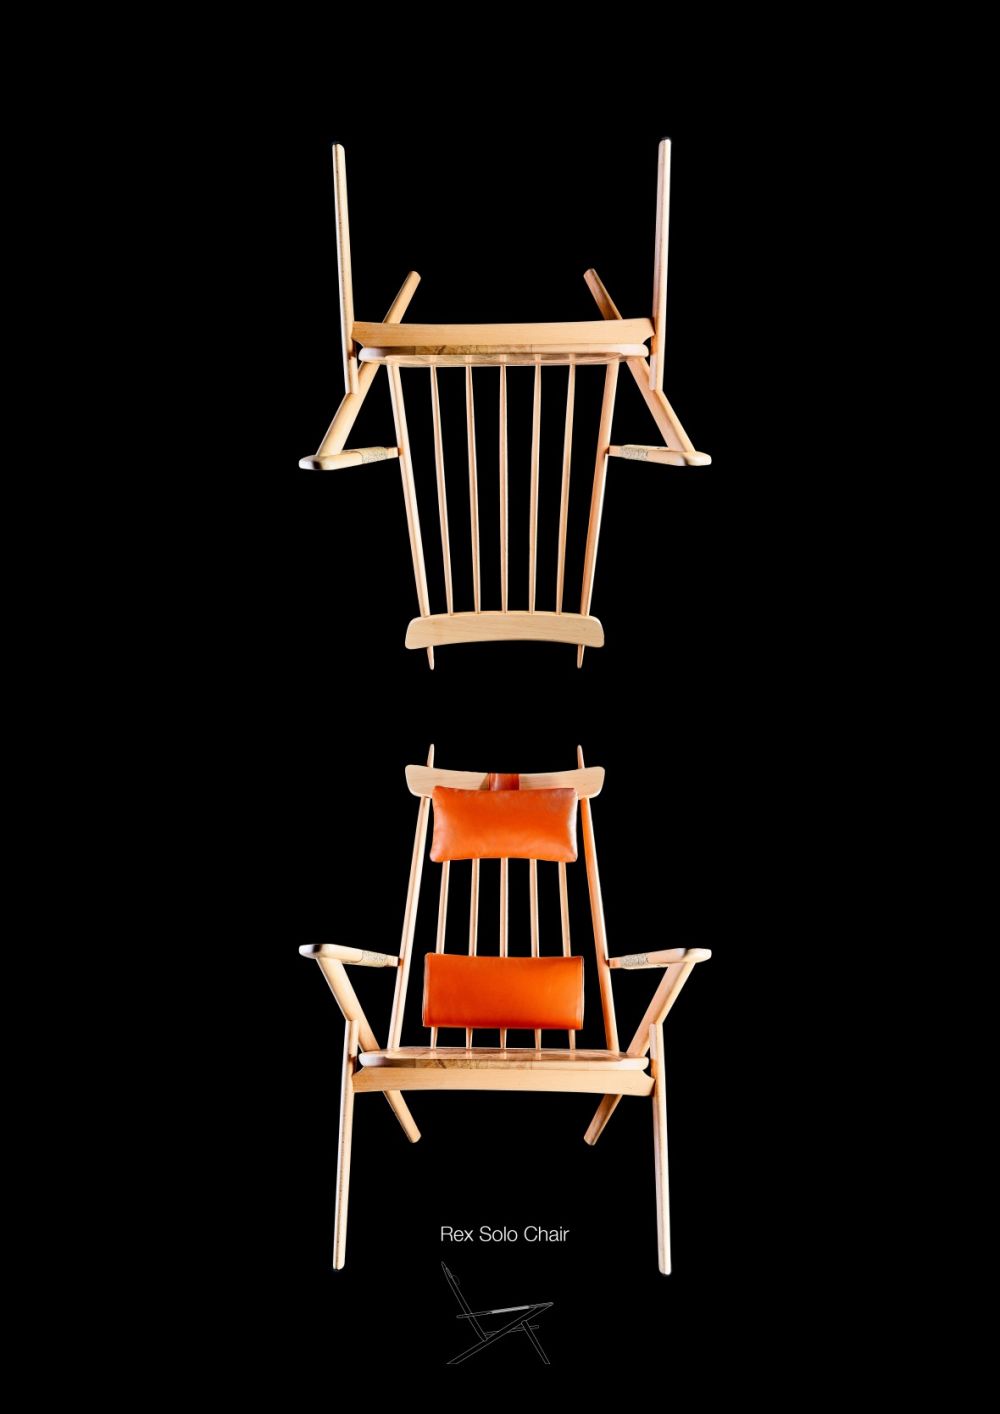 Rex Solo Chair - 005 - 2mb.jpg